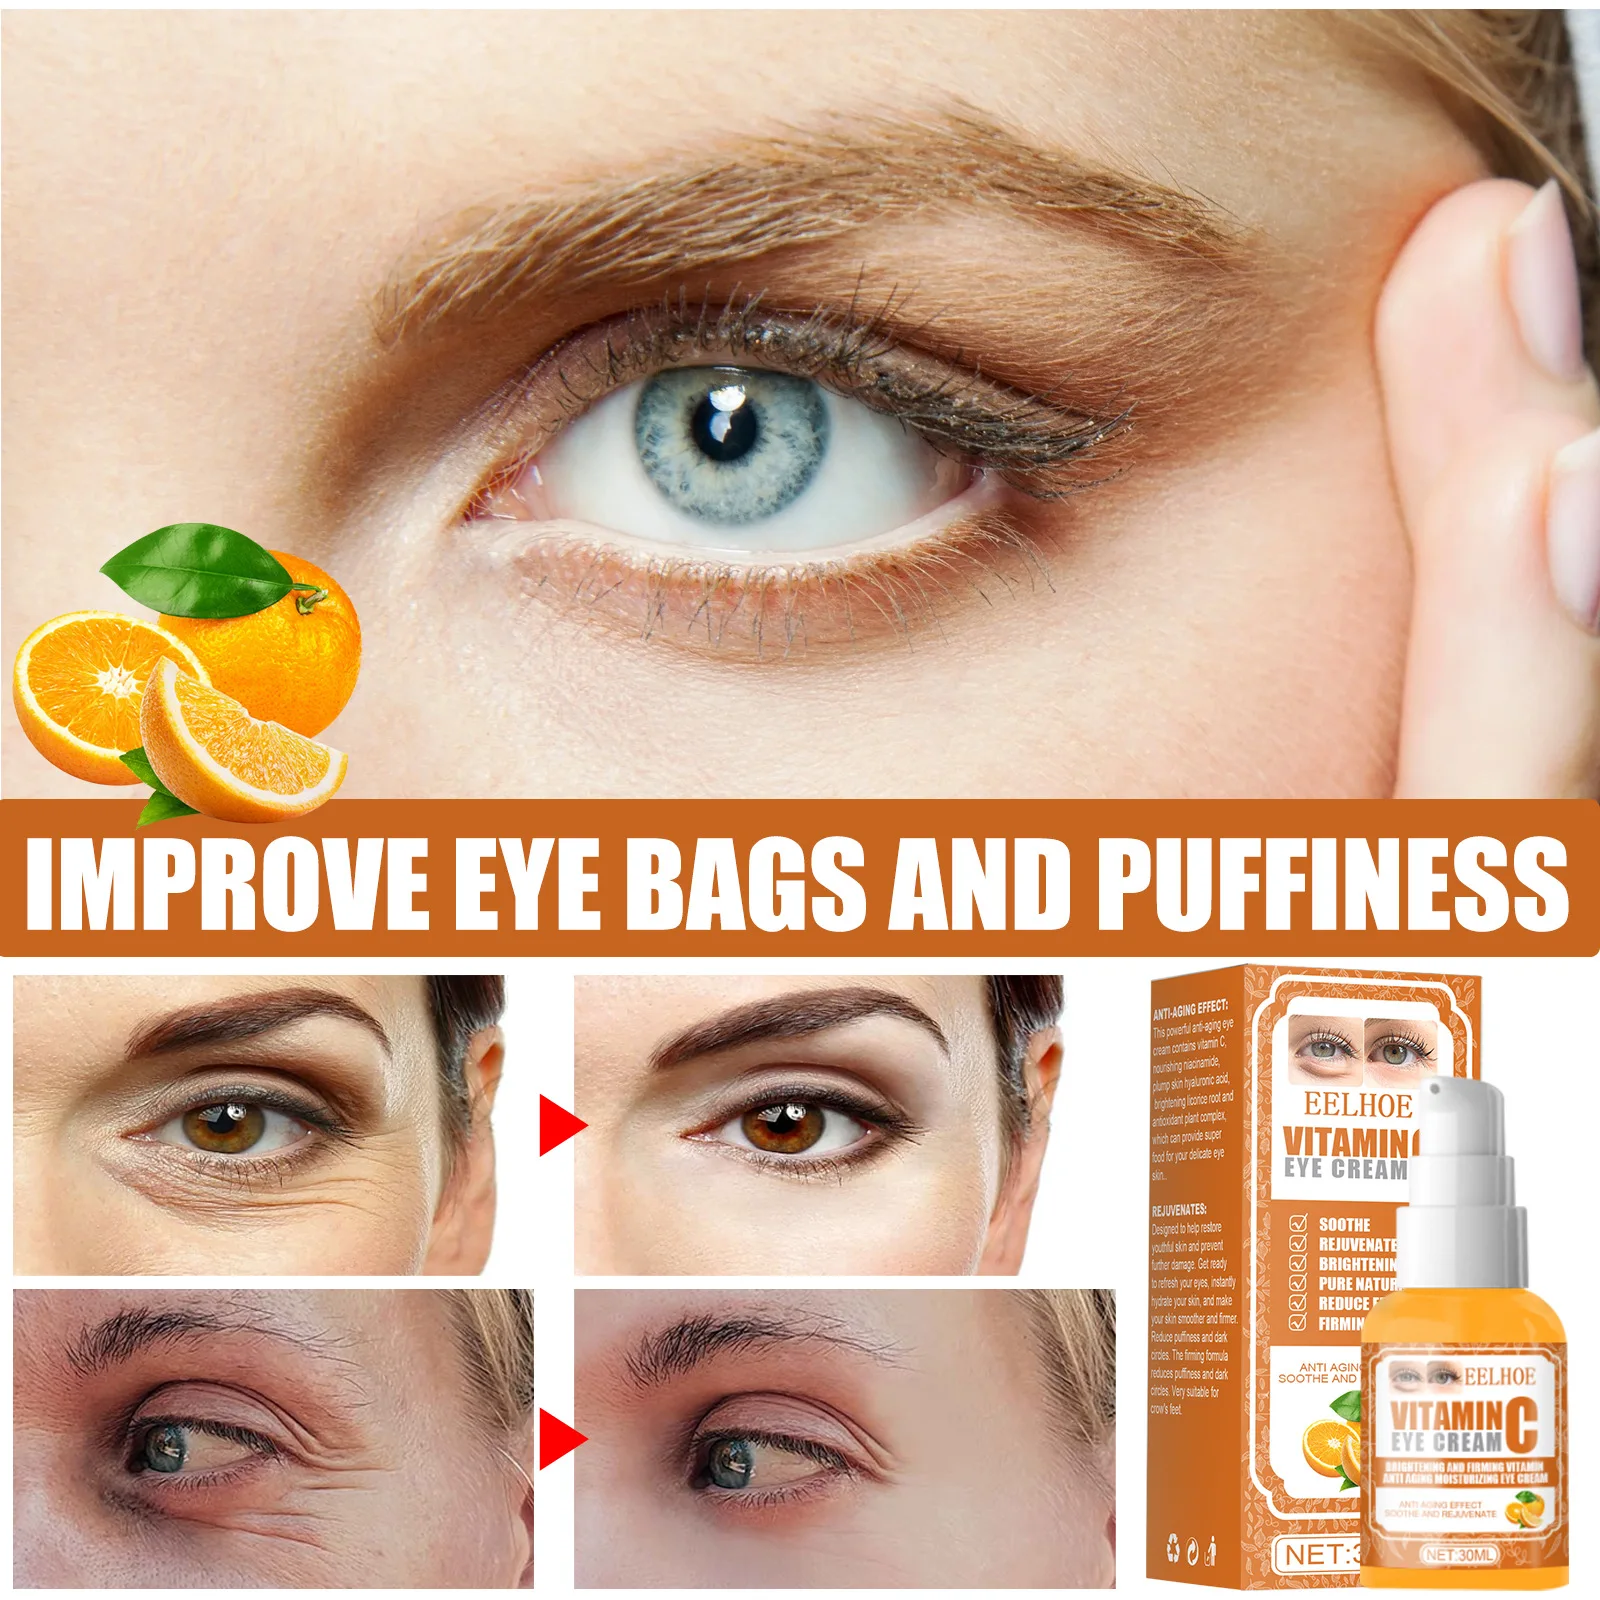 30g Rejuvenate and Beautiful Moisturizing Wrinkles Around The Eyes Lighten Dark Circles Vitamin C Eye Cream Free Shipping